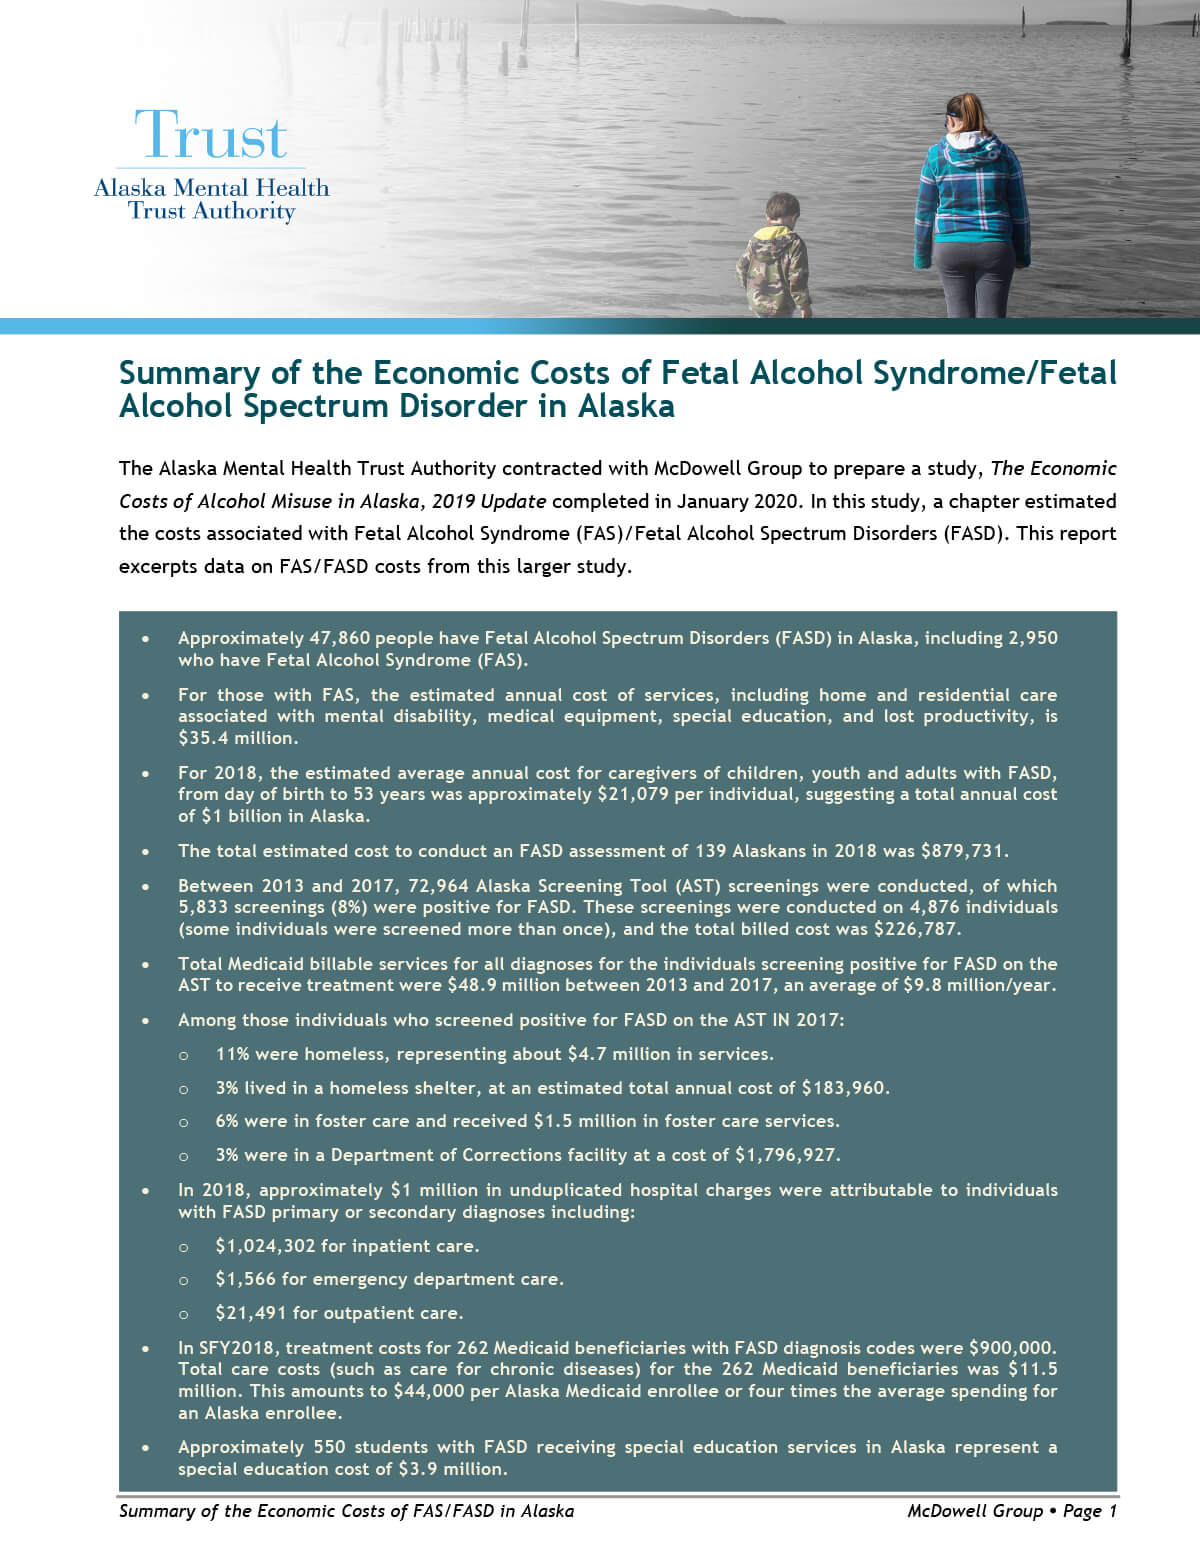 Summary of the Economic Costs of Fetal Alcohol Syndrome / Fetal Alcohol Spectrum Disorder in Alaska - Alaska Mental Health Trust